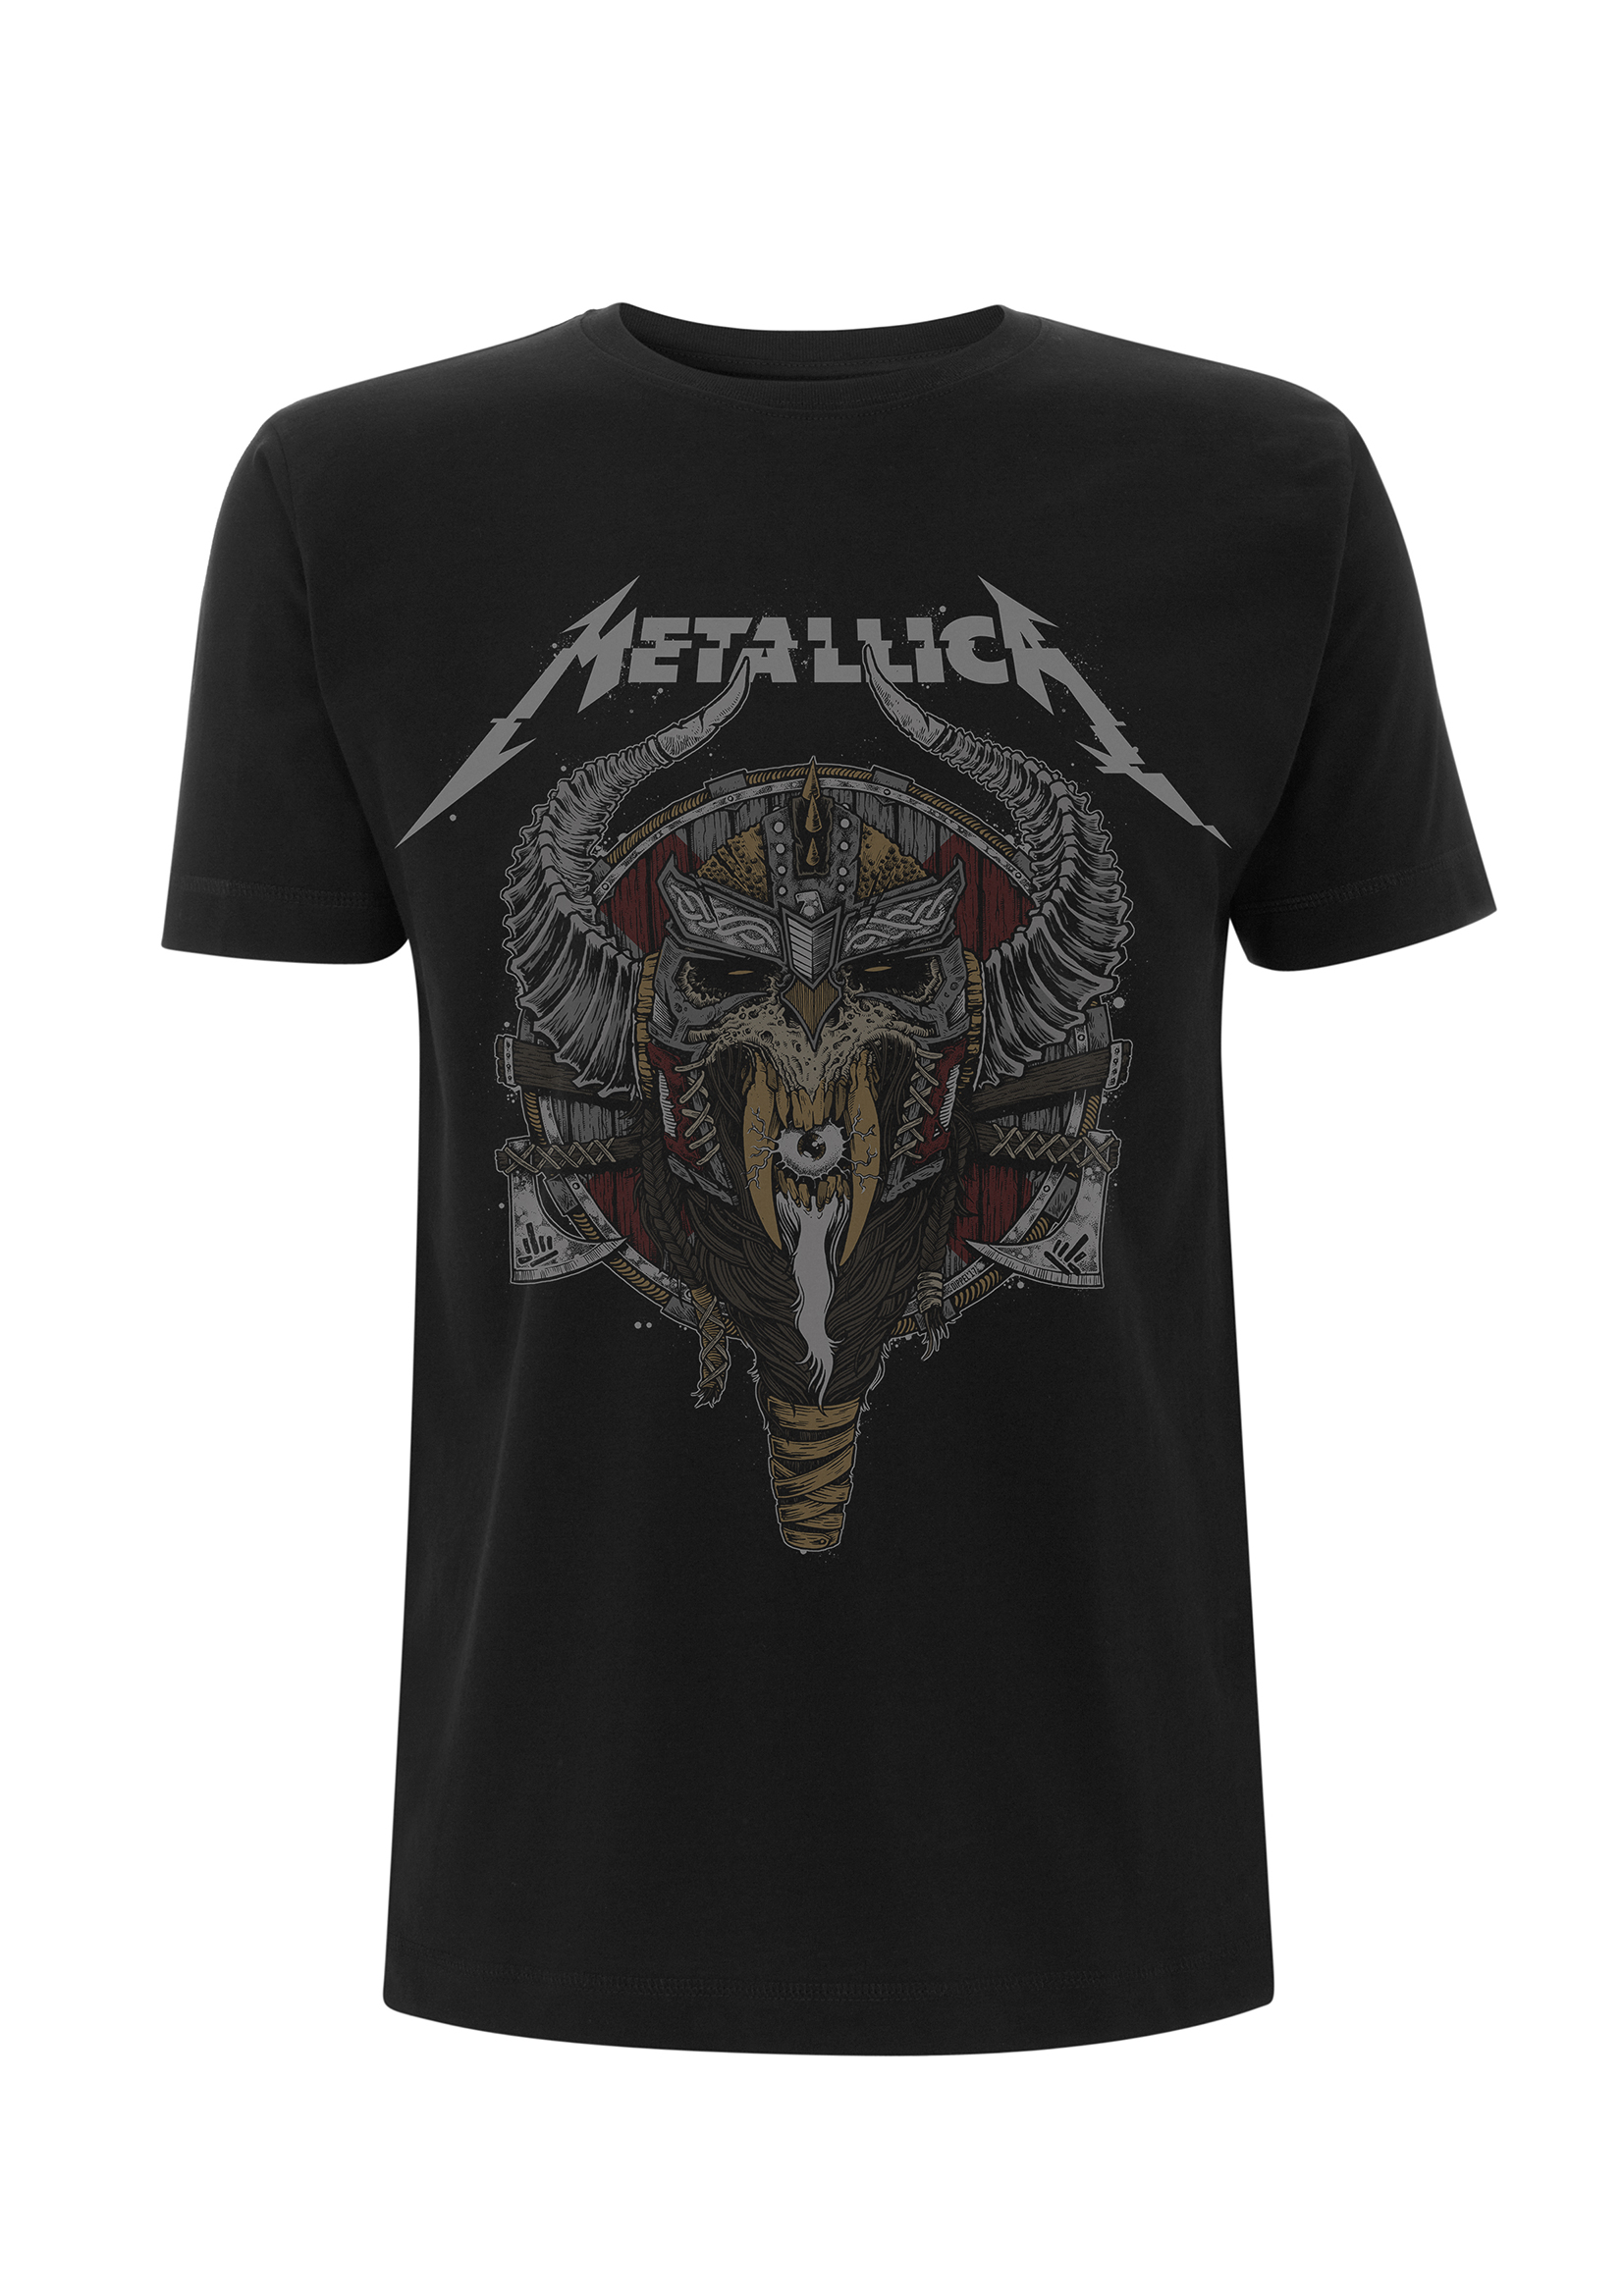 Metallica Viking Black T-shirt - Probity Wholesale